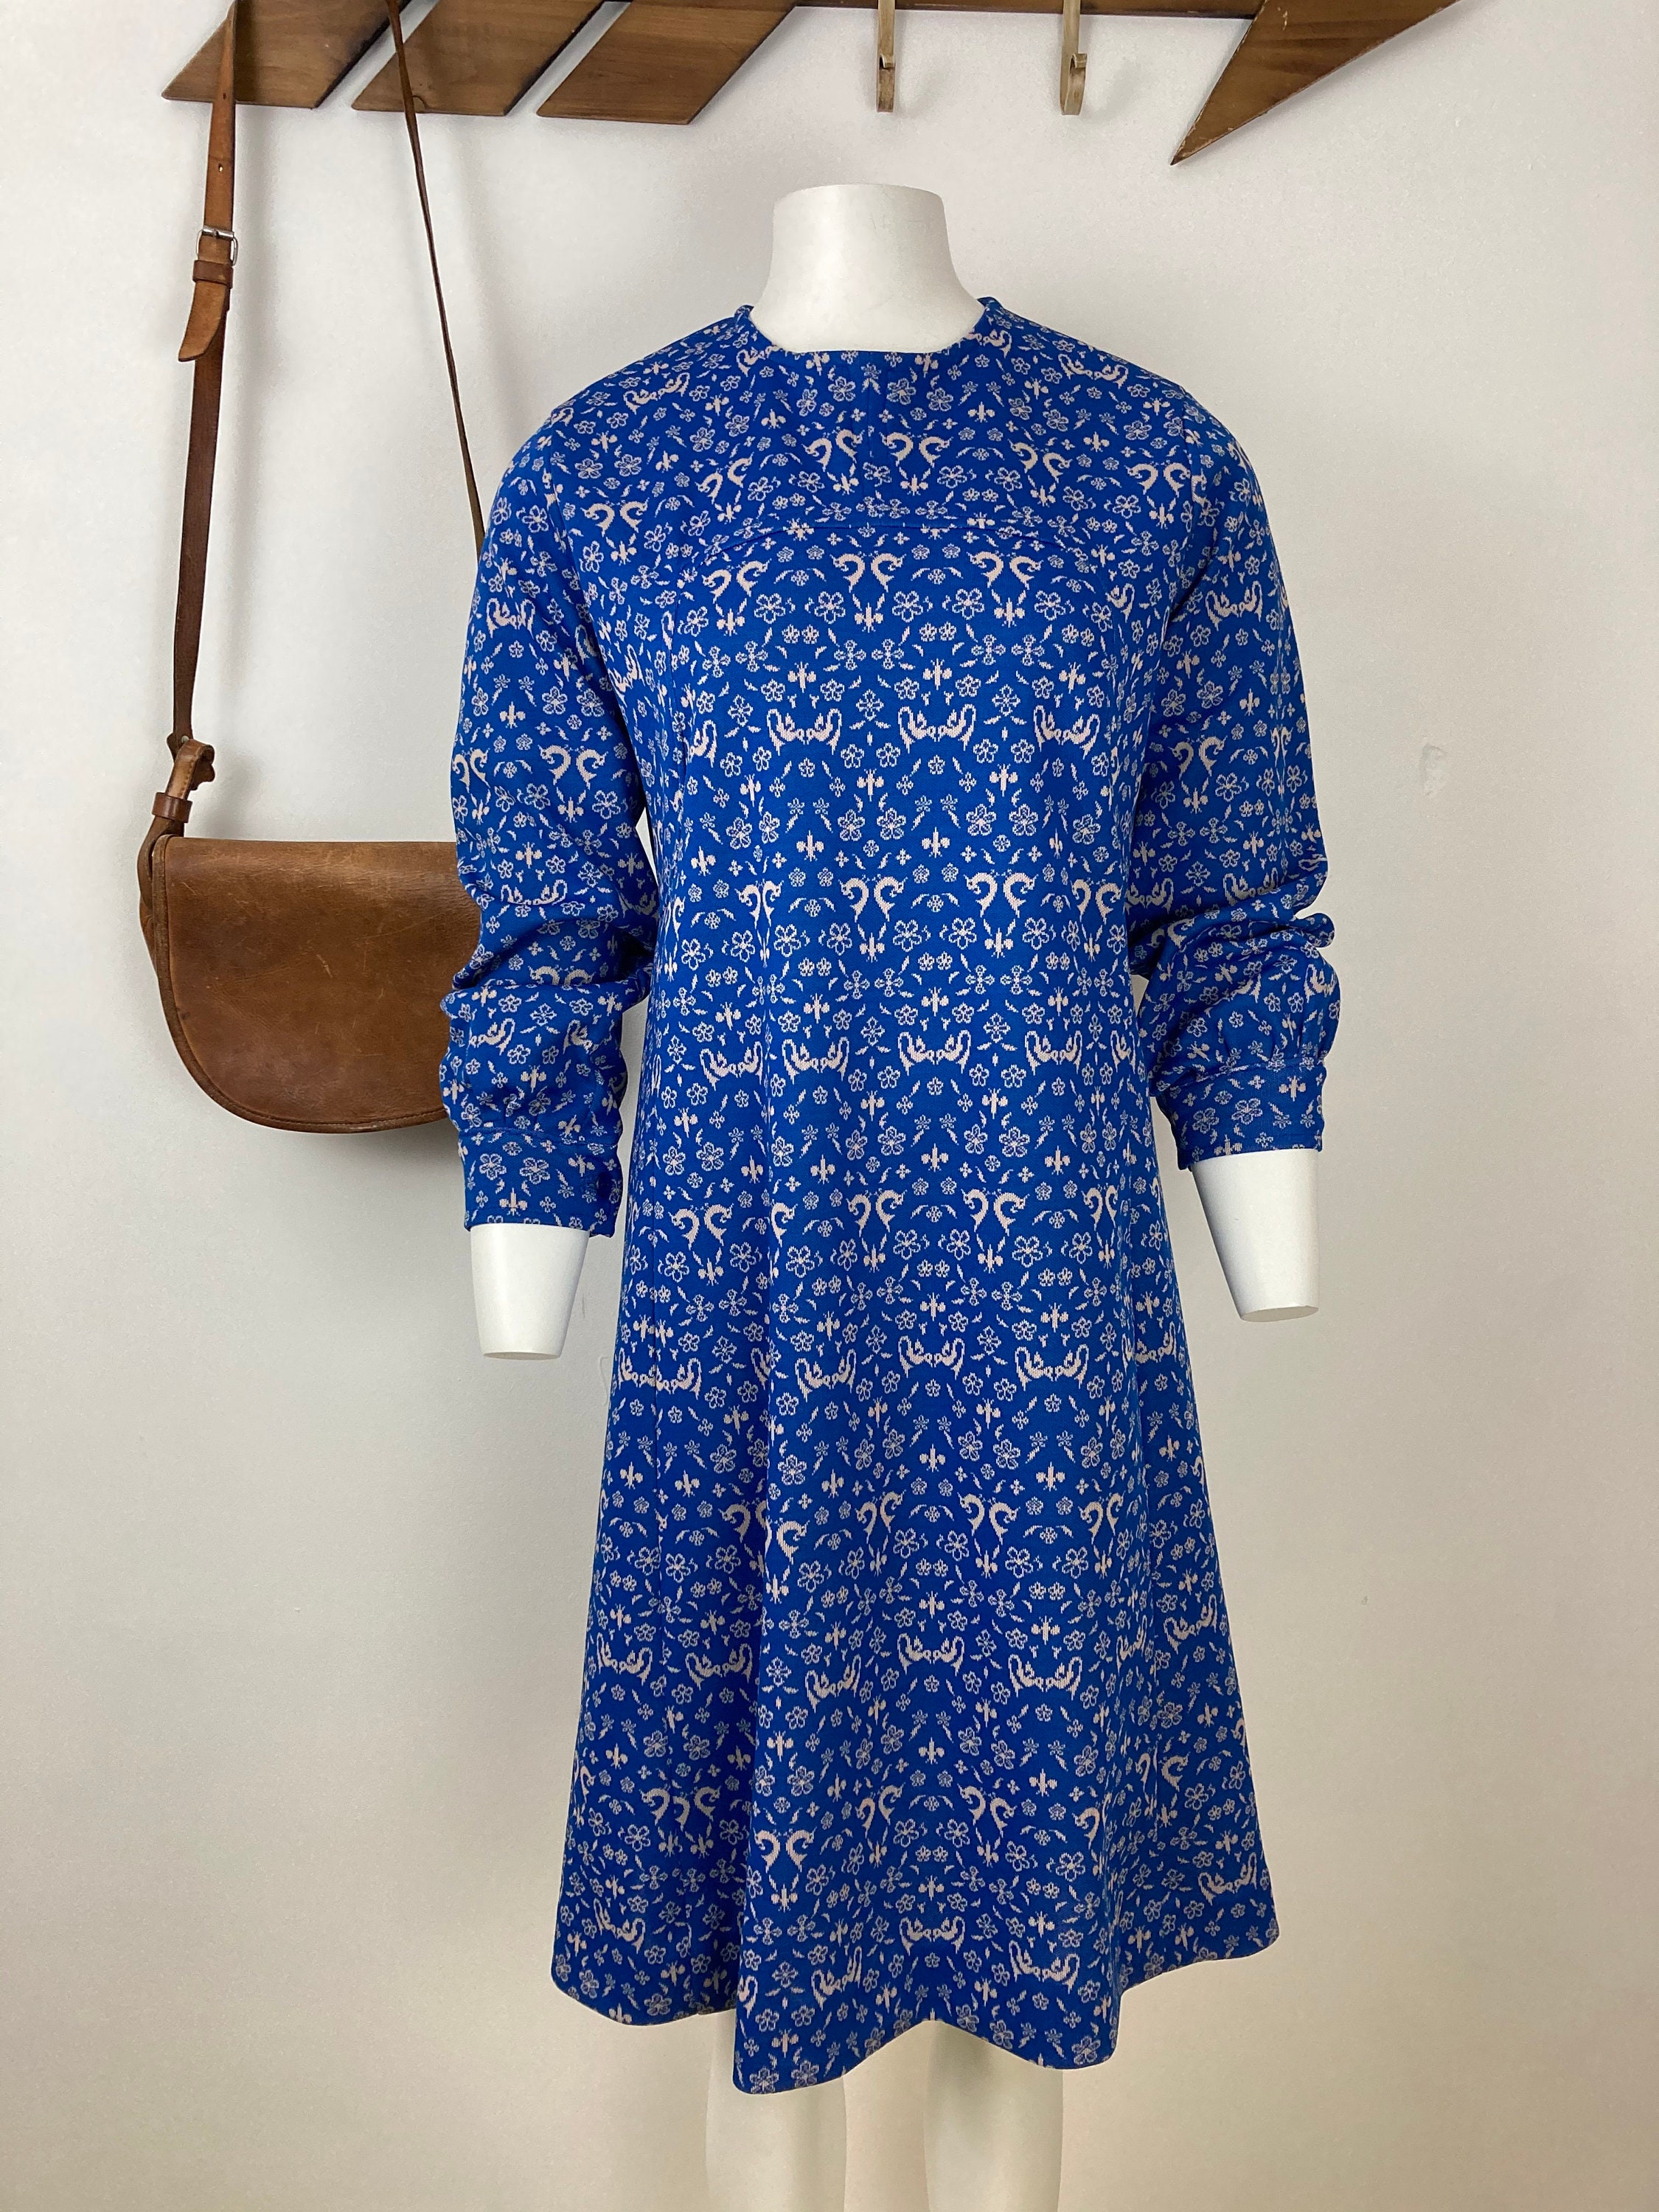 60s 70s Vintage Handmade Shift Dress. Blue. UK 12-14. Mod. - Etsy UK